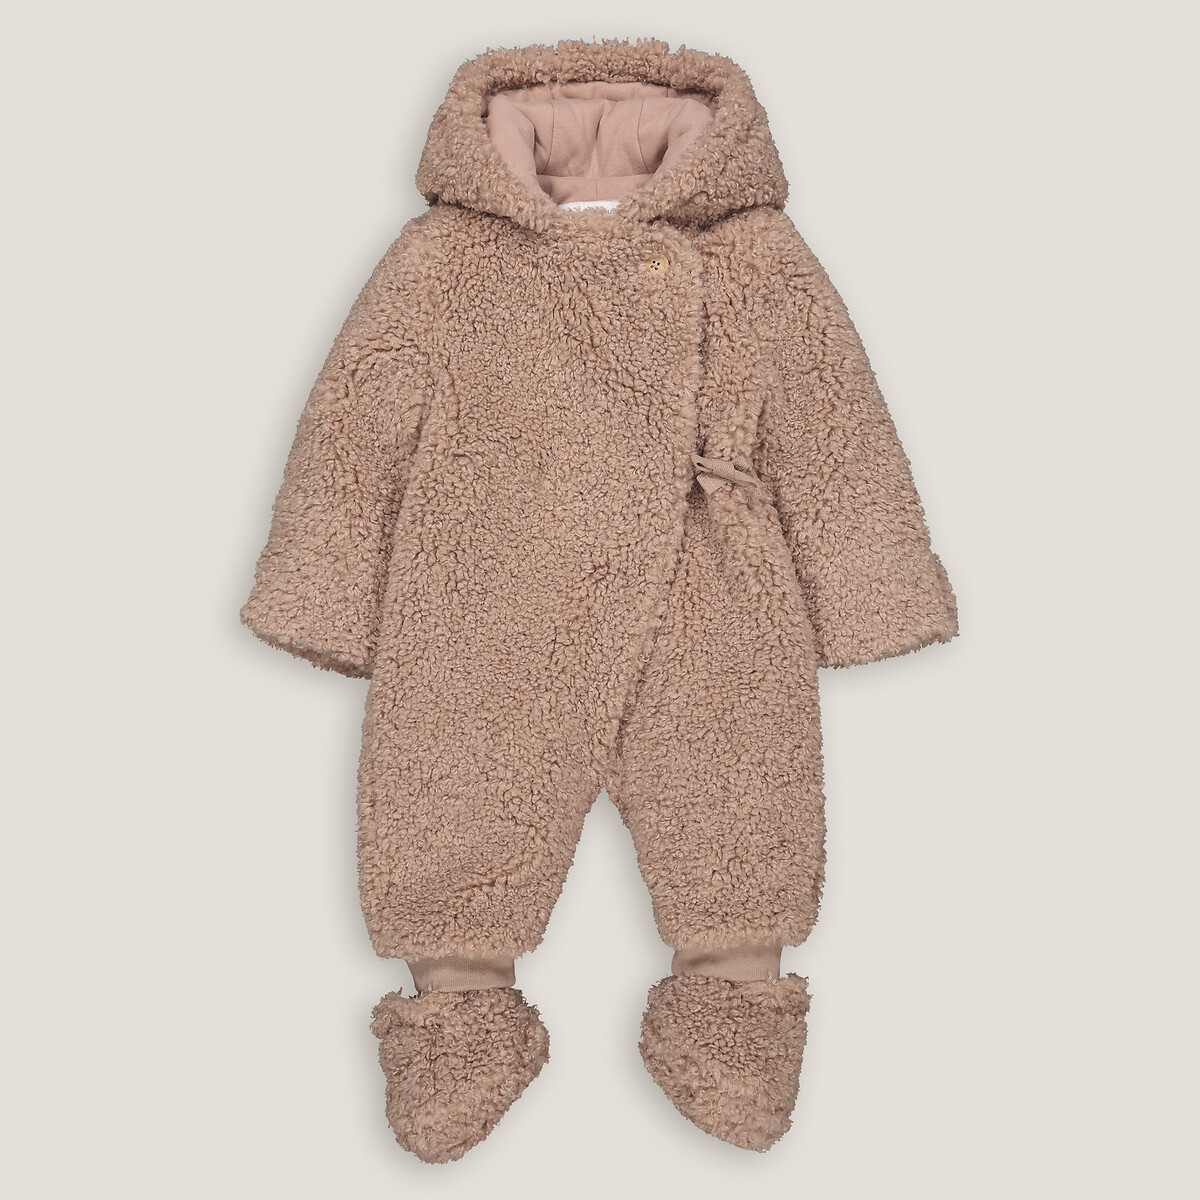 Warm Hooded Pramsuit in Teddy Faux Fur